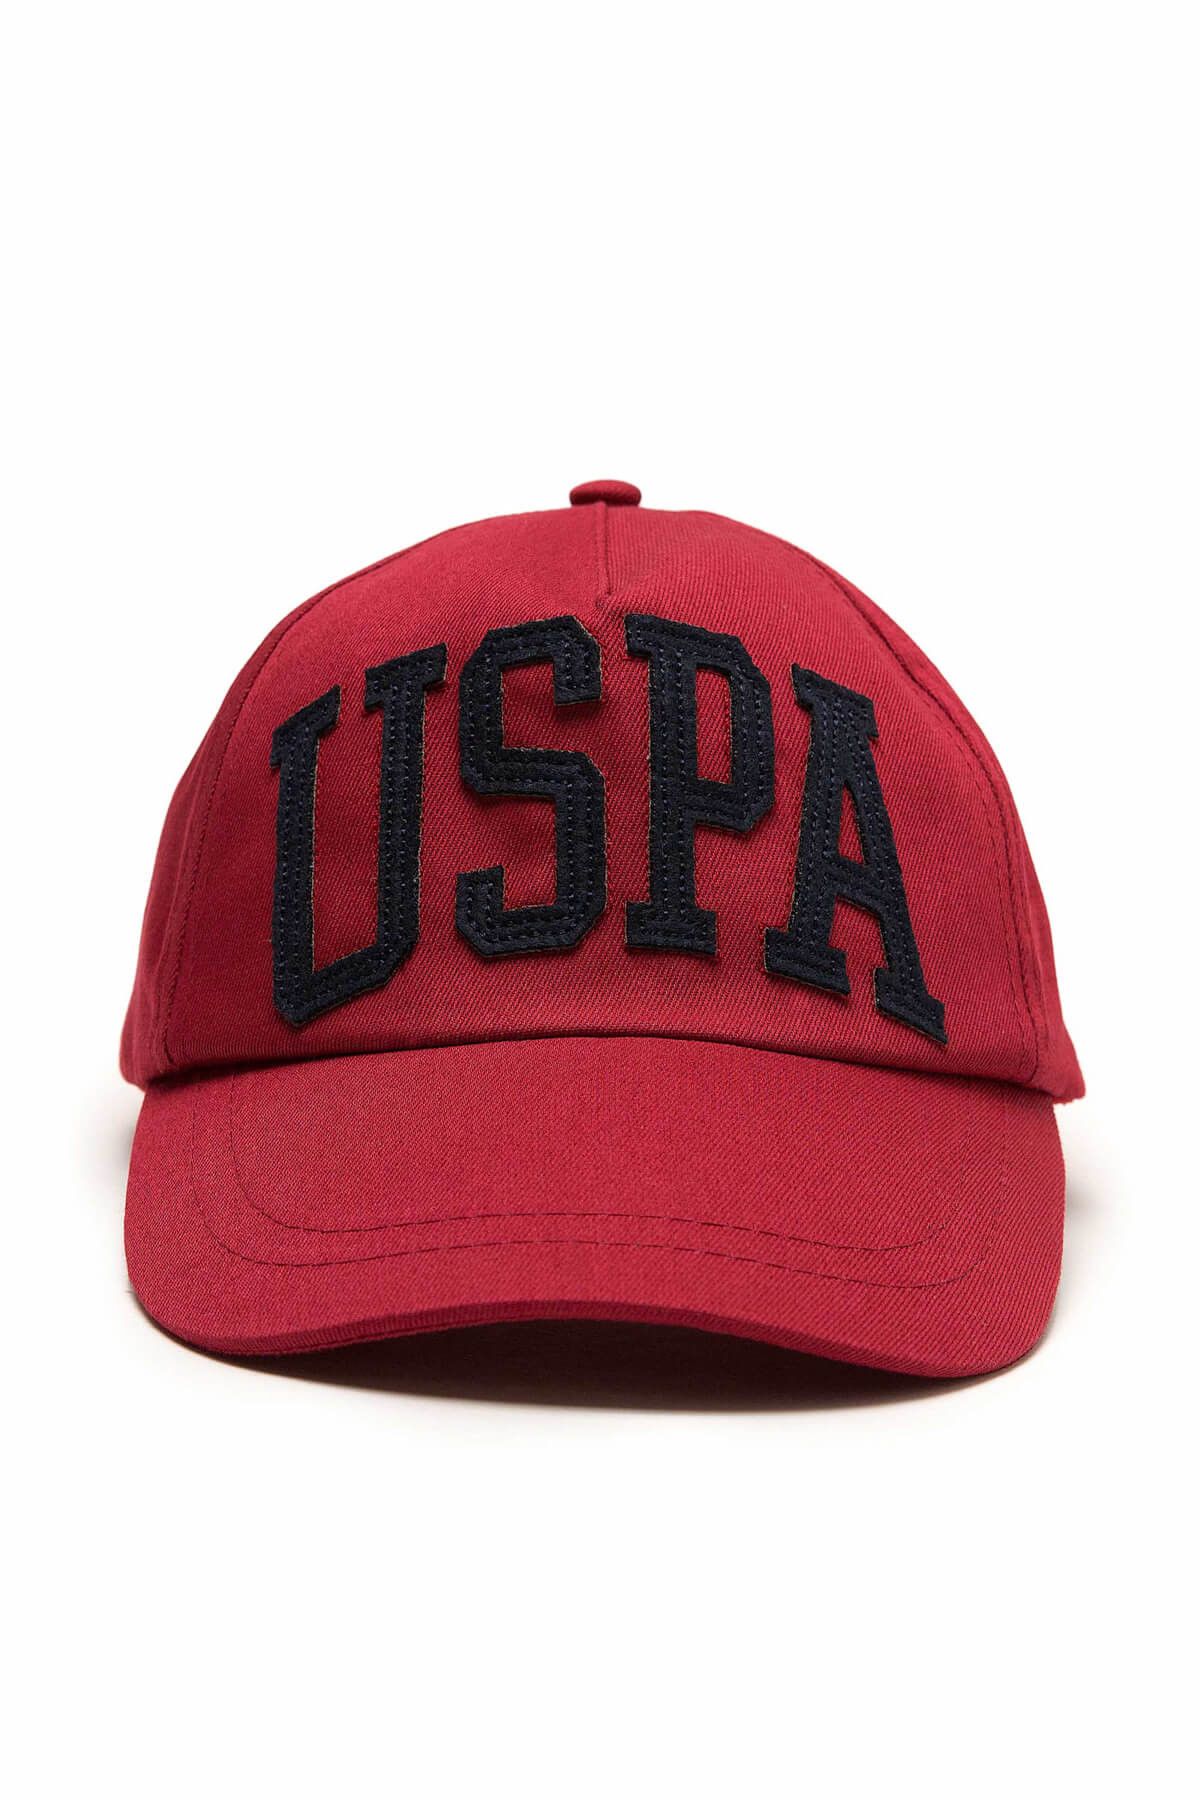 U.S. Polo Assn. Erkek Şapka A081AK064.P01.RUDYIY8